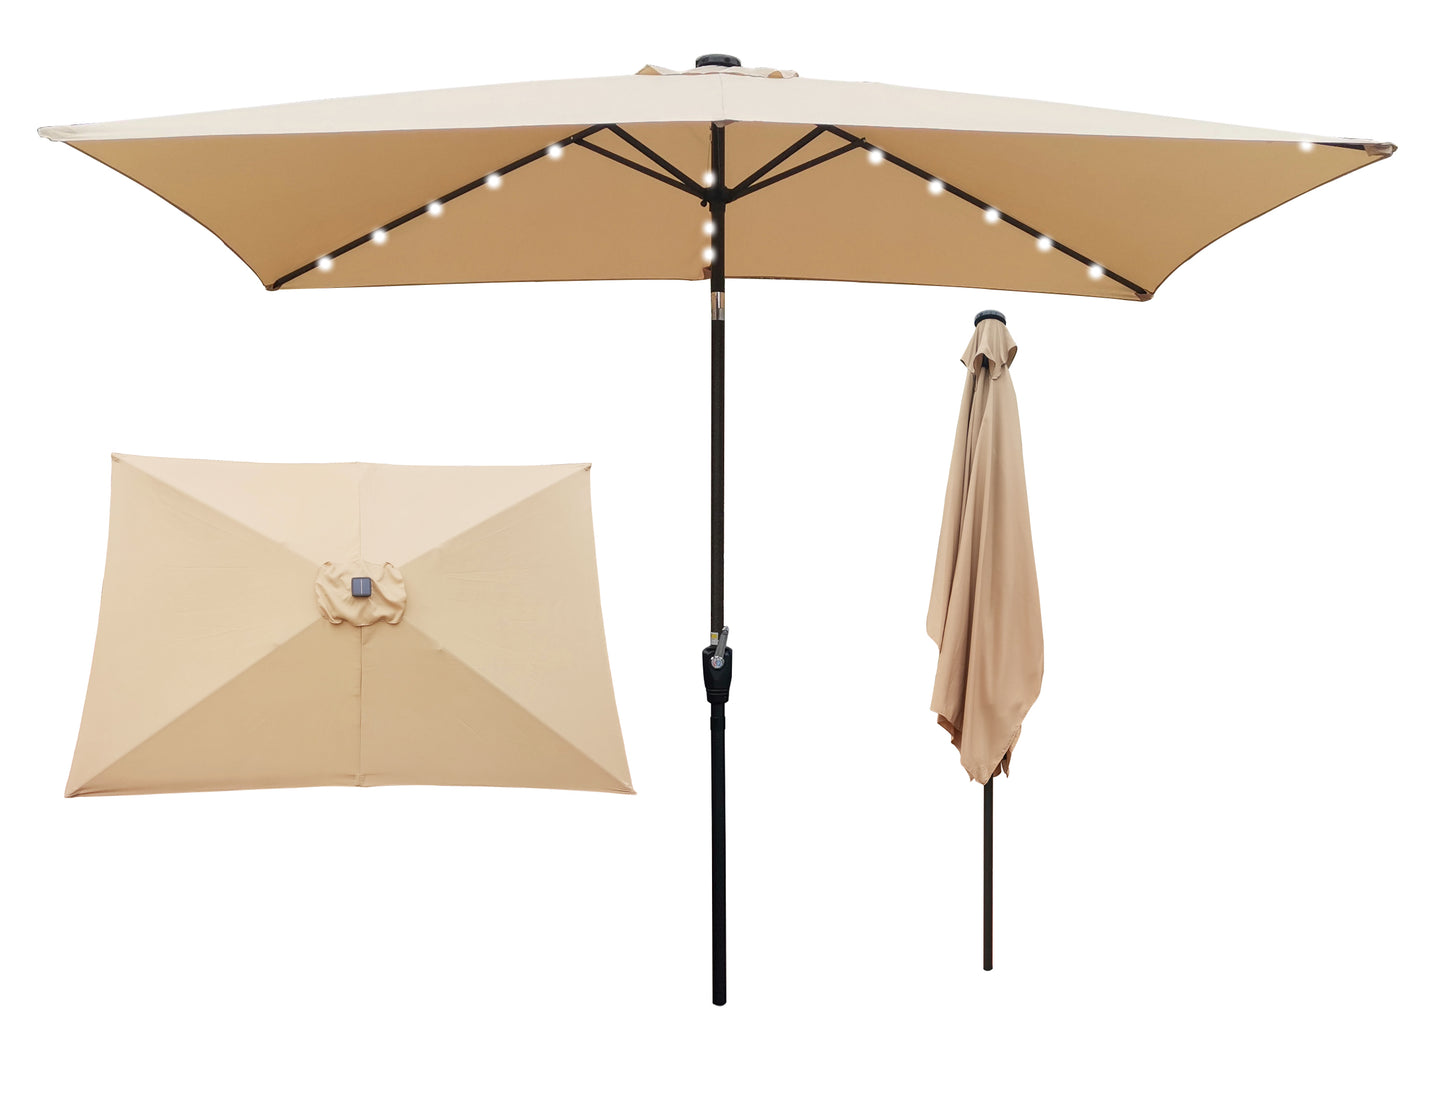 10 x 6.5t Rectangular Patio Solar LED Lighted Outdoor Market Umbrellas with Crank and Push Button Tilt